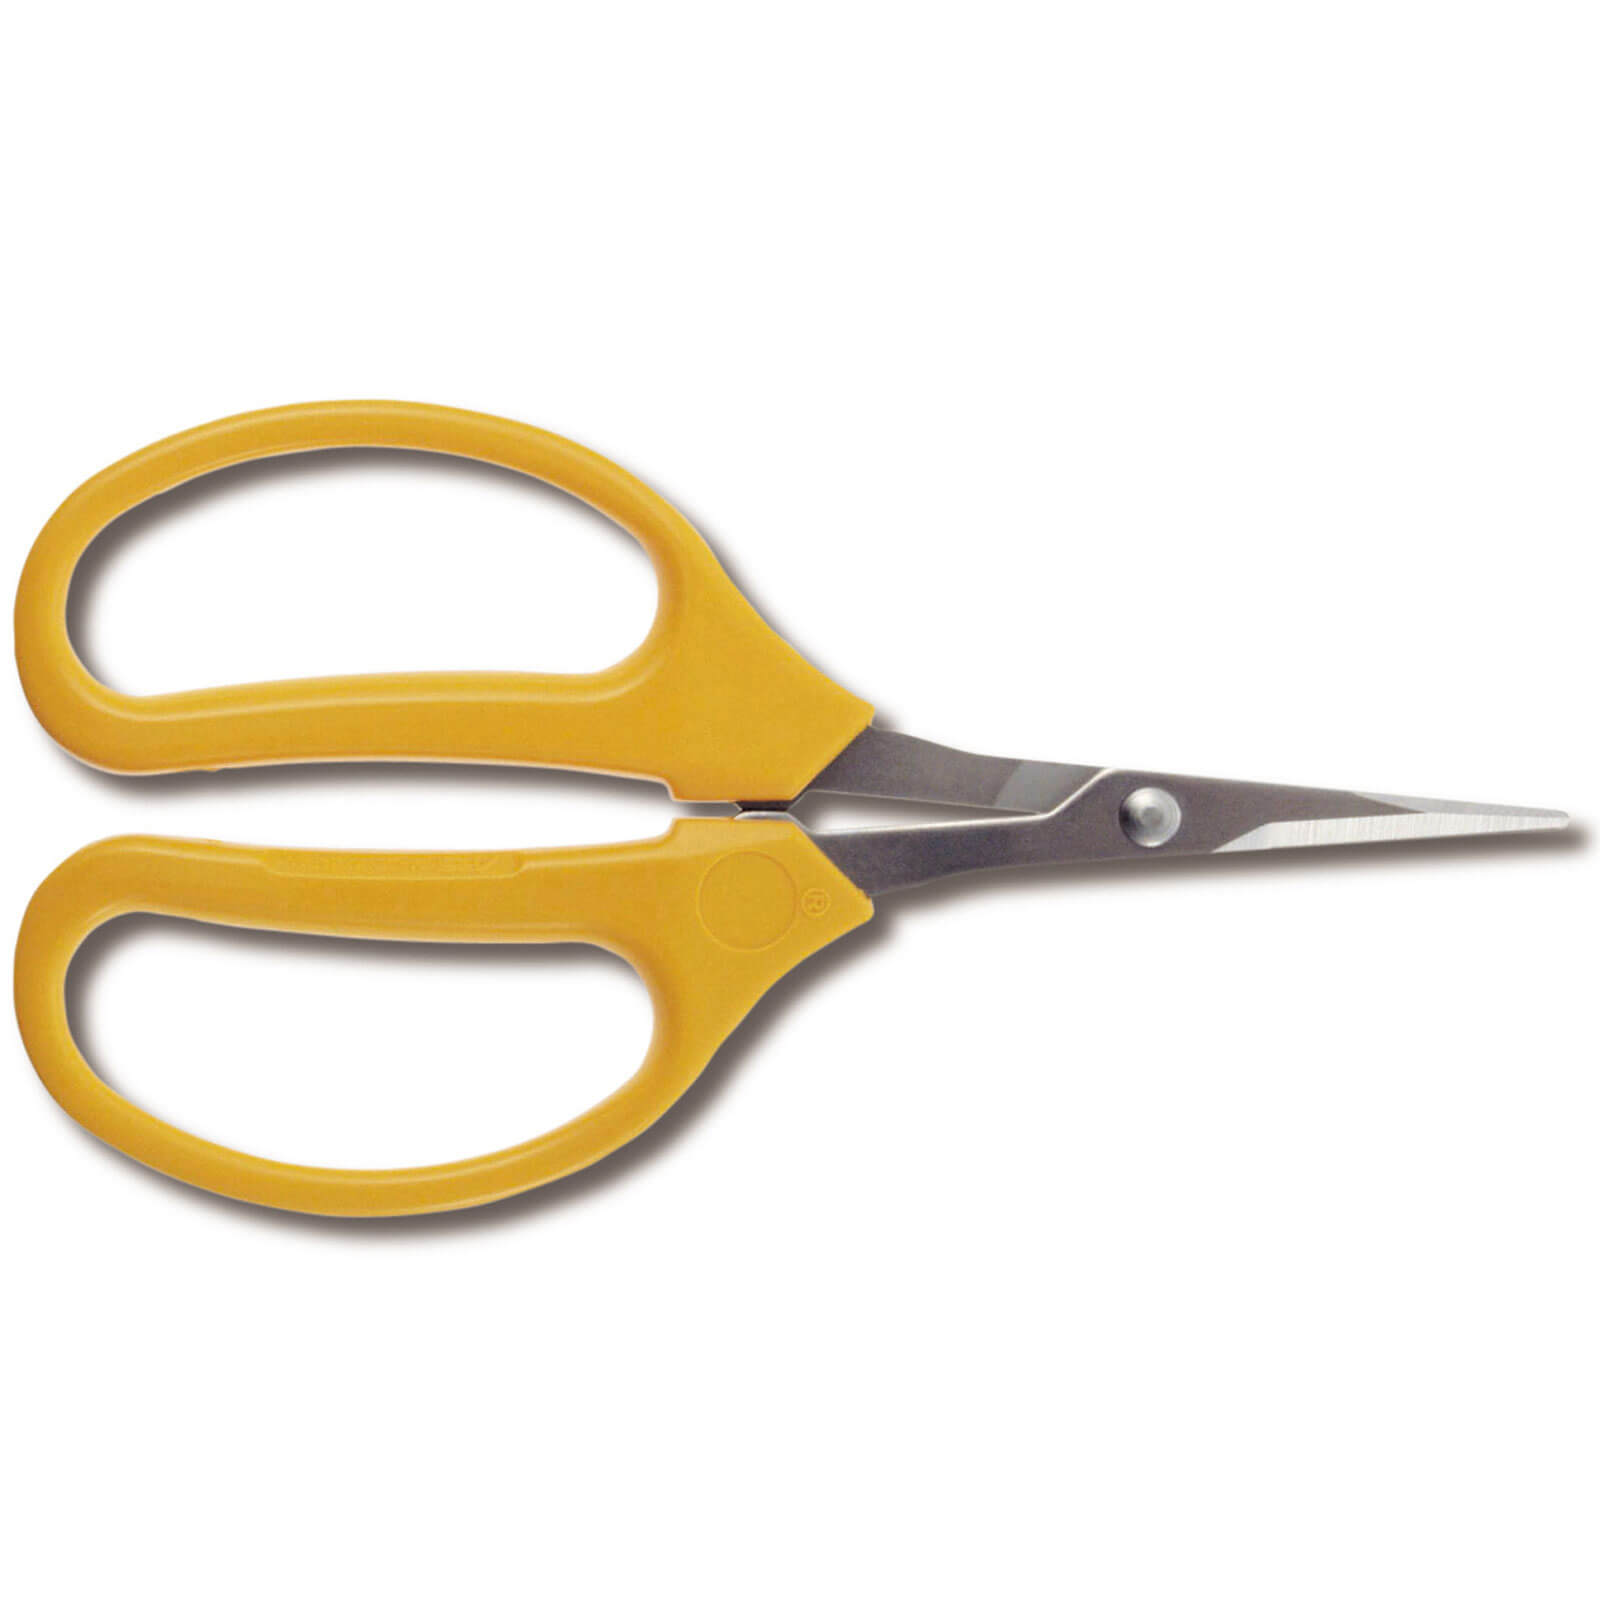 Photo of Ars 320 Straight Stainless Steel Fruit Pruner Scissors